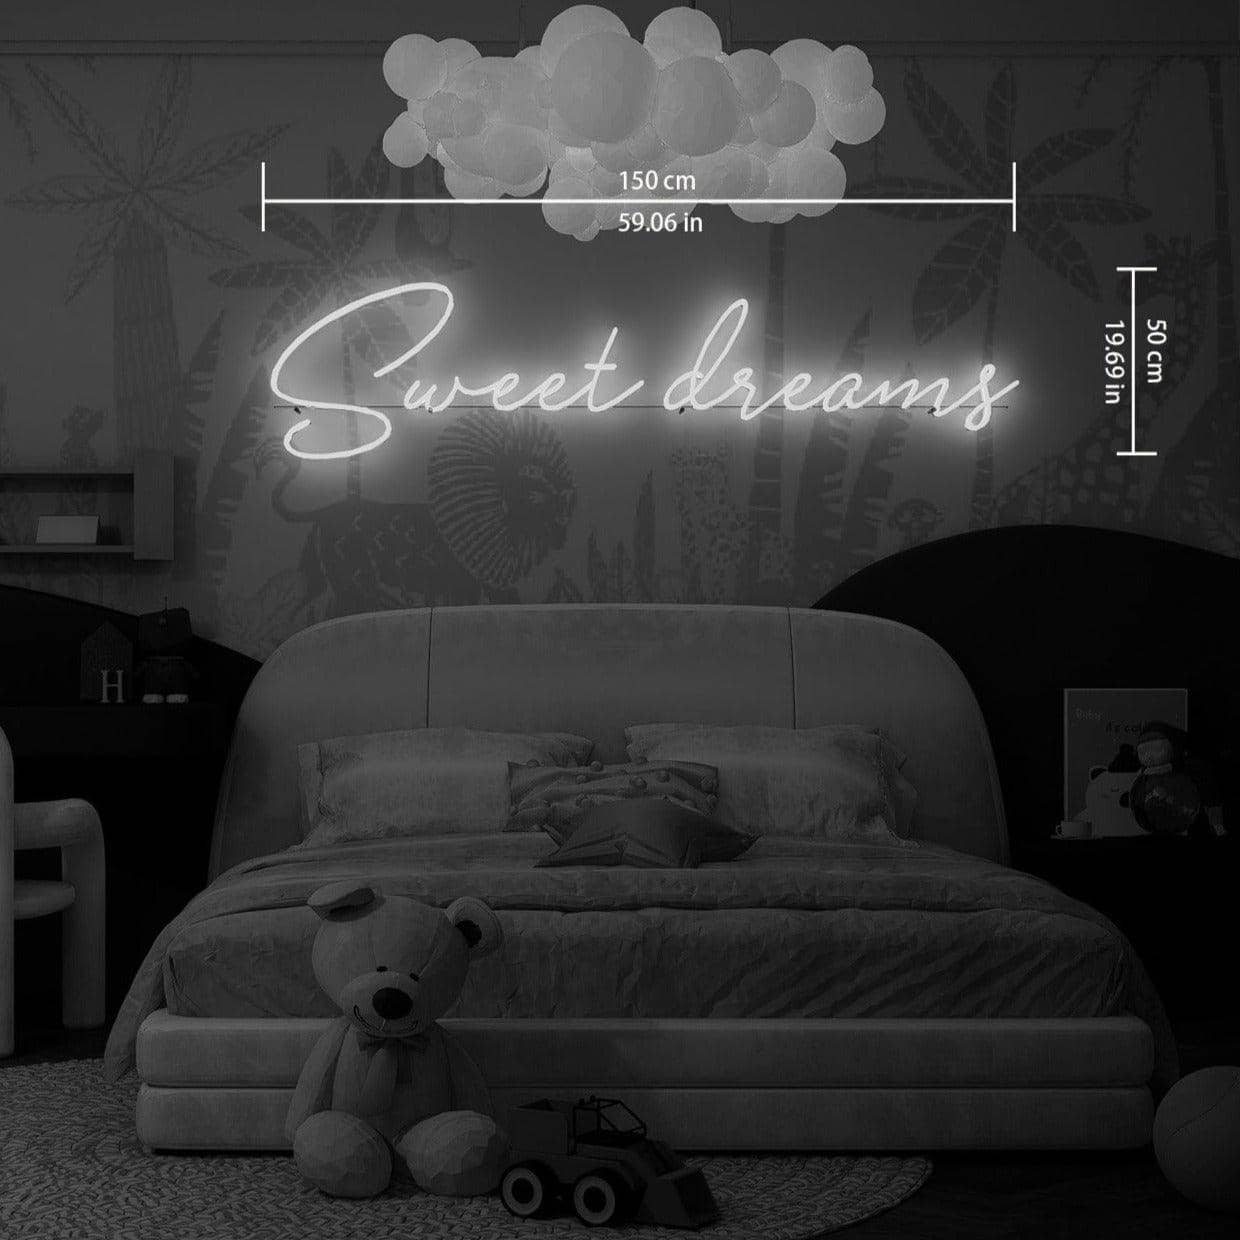 dark-night-lit-white-neon-light-size-chart-hanging-in-bedroom-Sweet-dreams